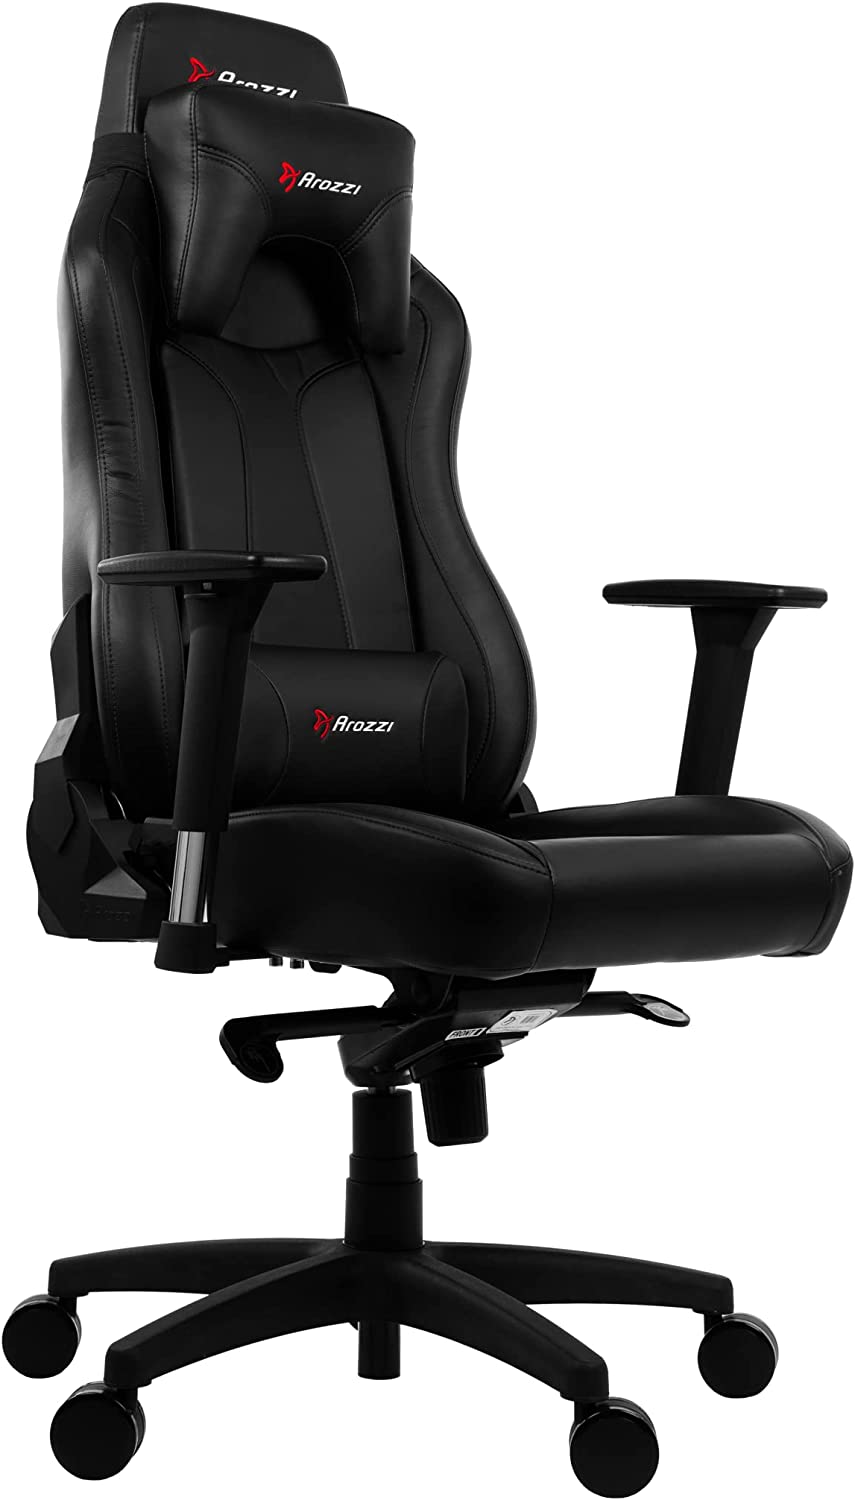 Arozzi Vernazza Super Premium Gaming Chair - Black